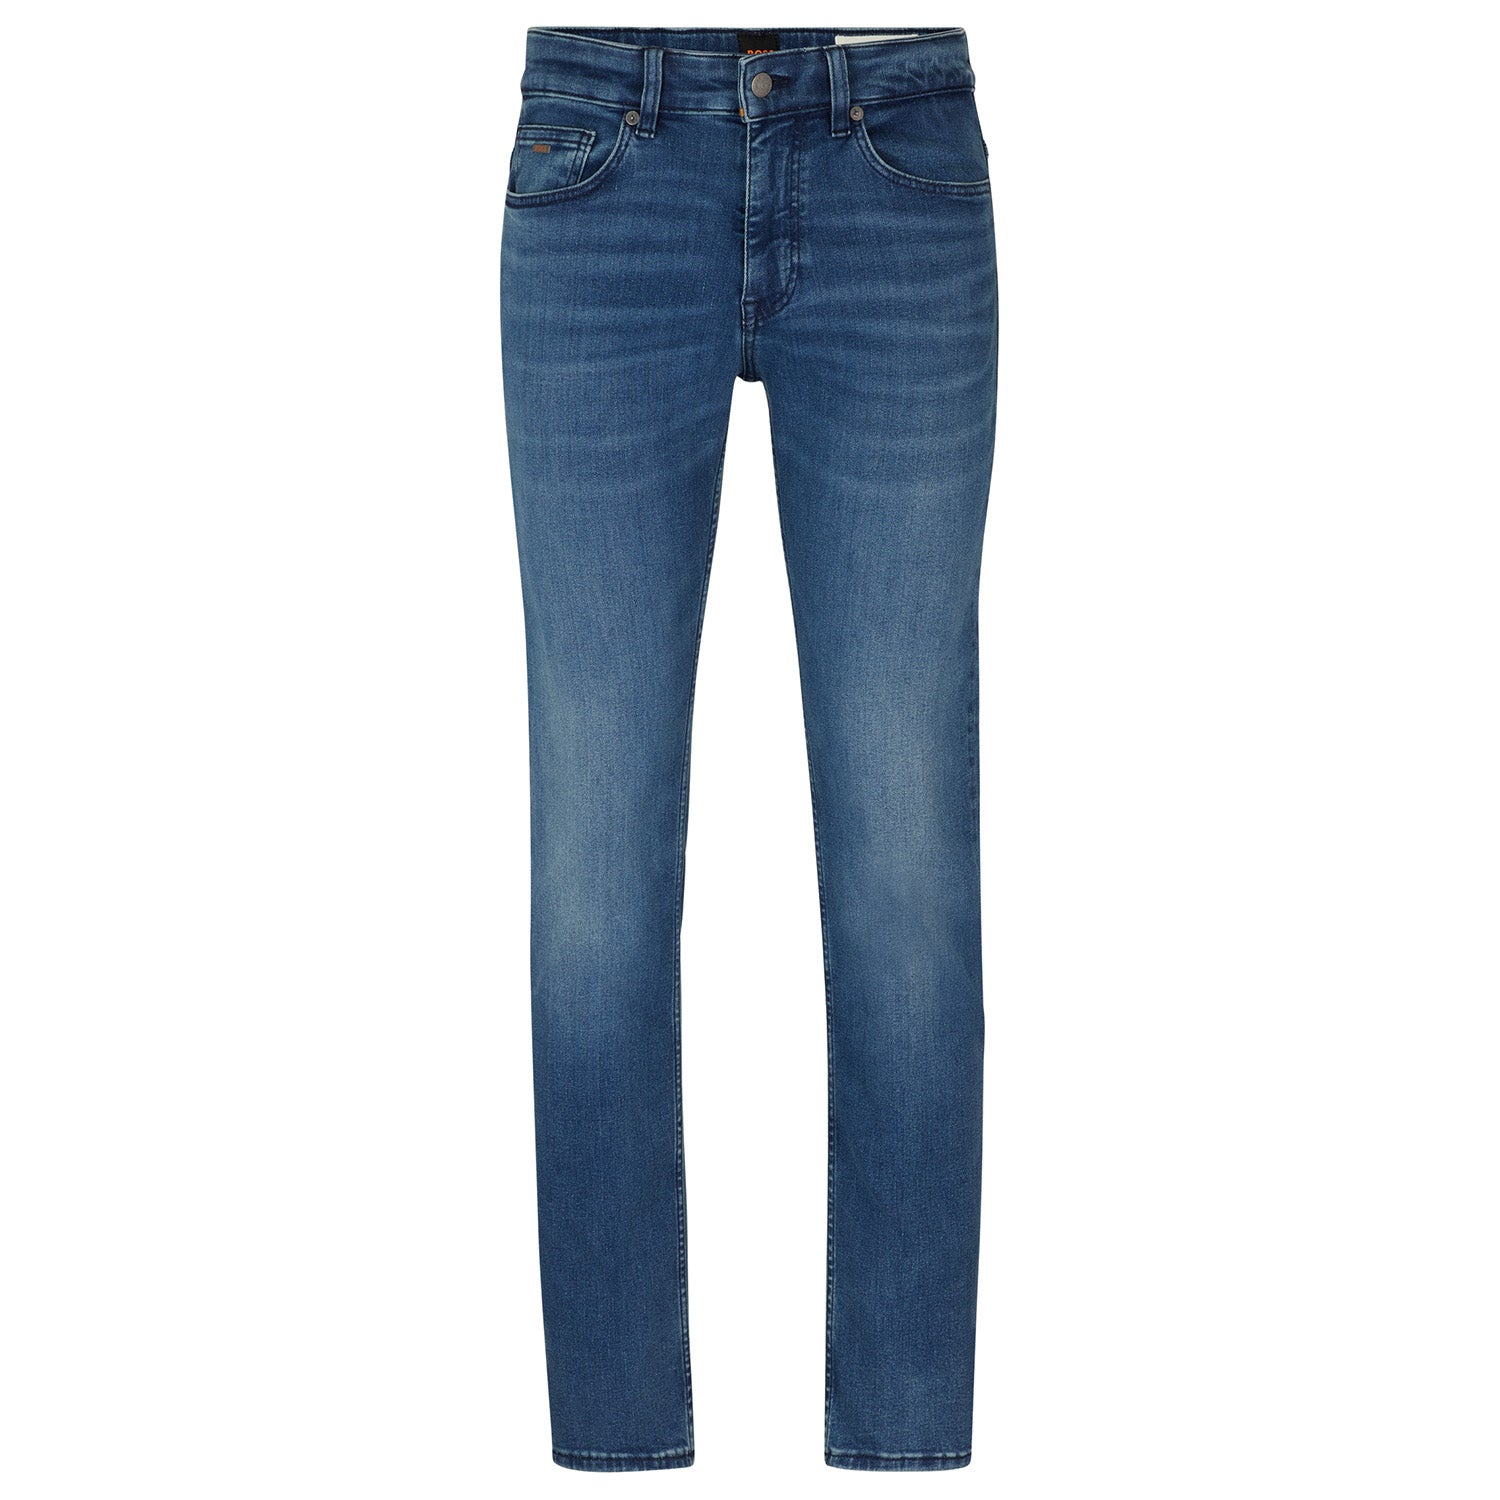 Slim-Fit Jeans aus blauem Super-Stretch-Denim